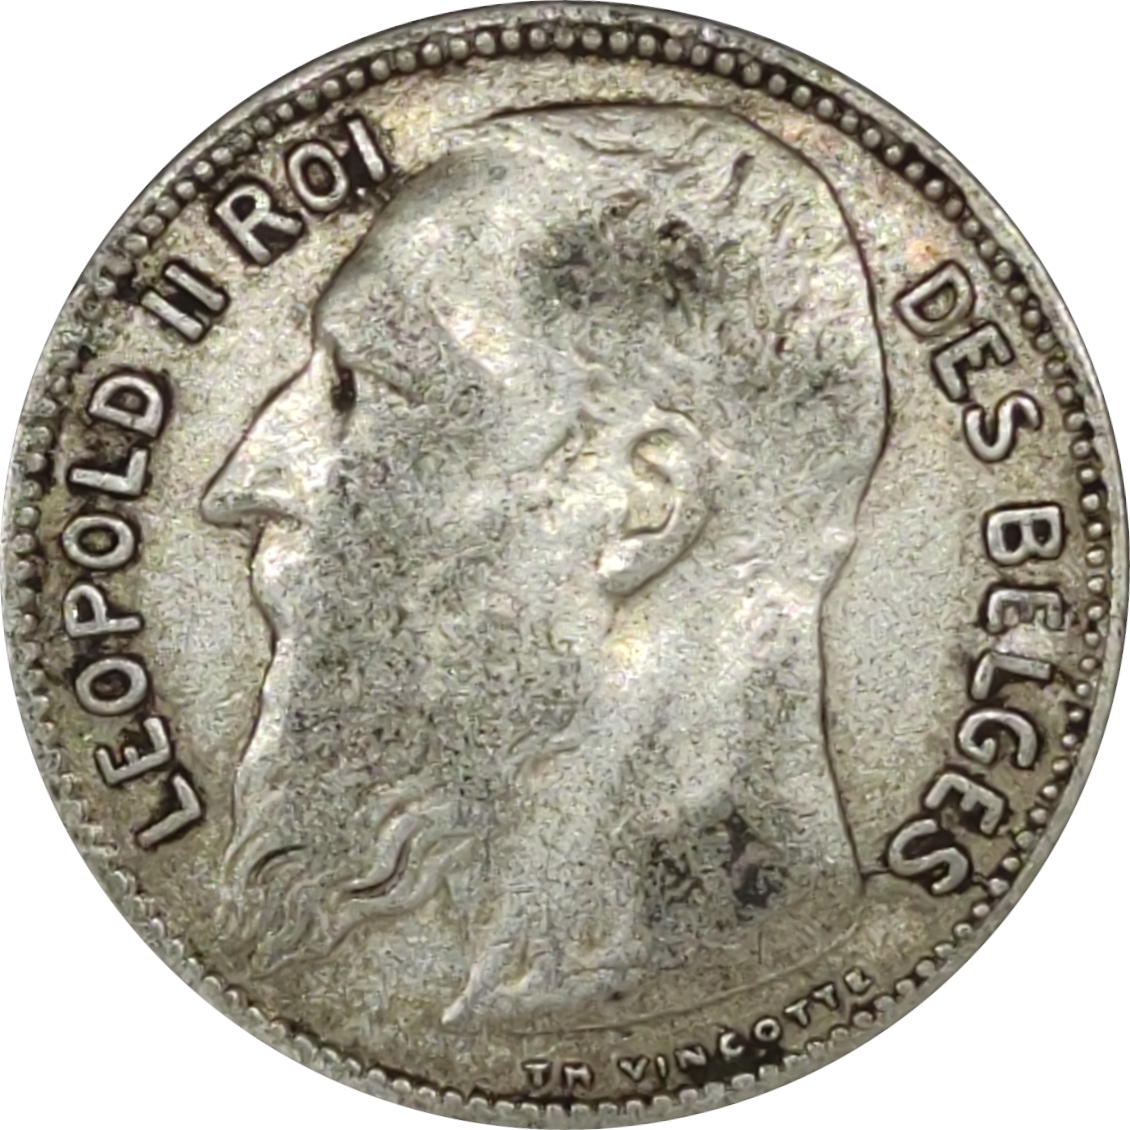 1 franc - Leopold II - Old head